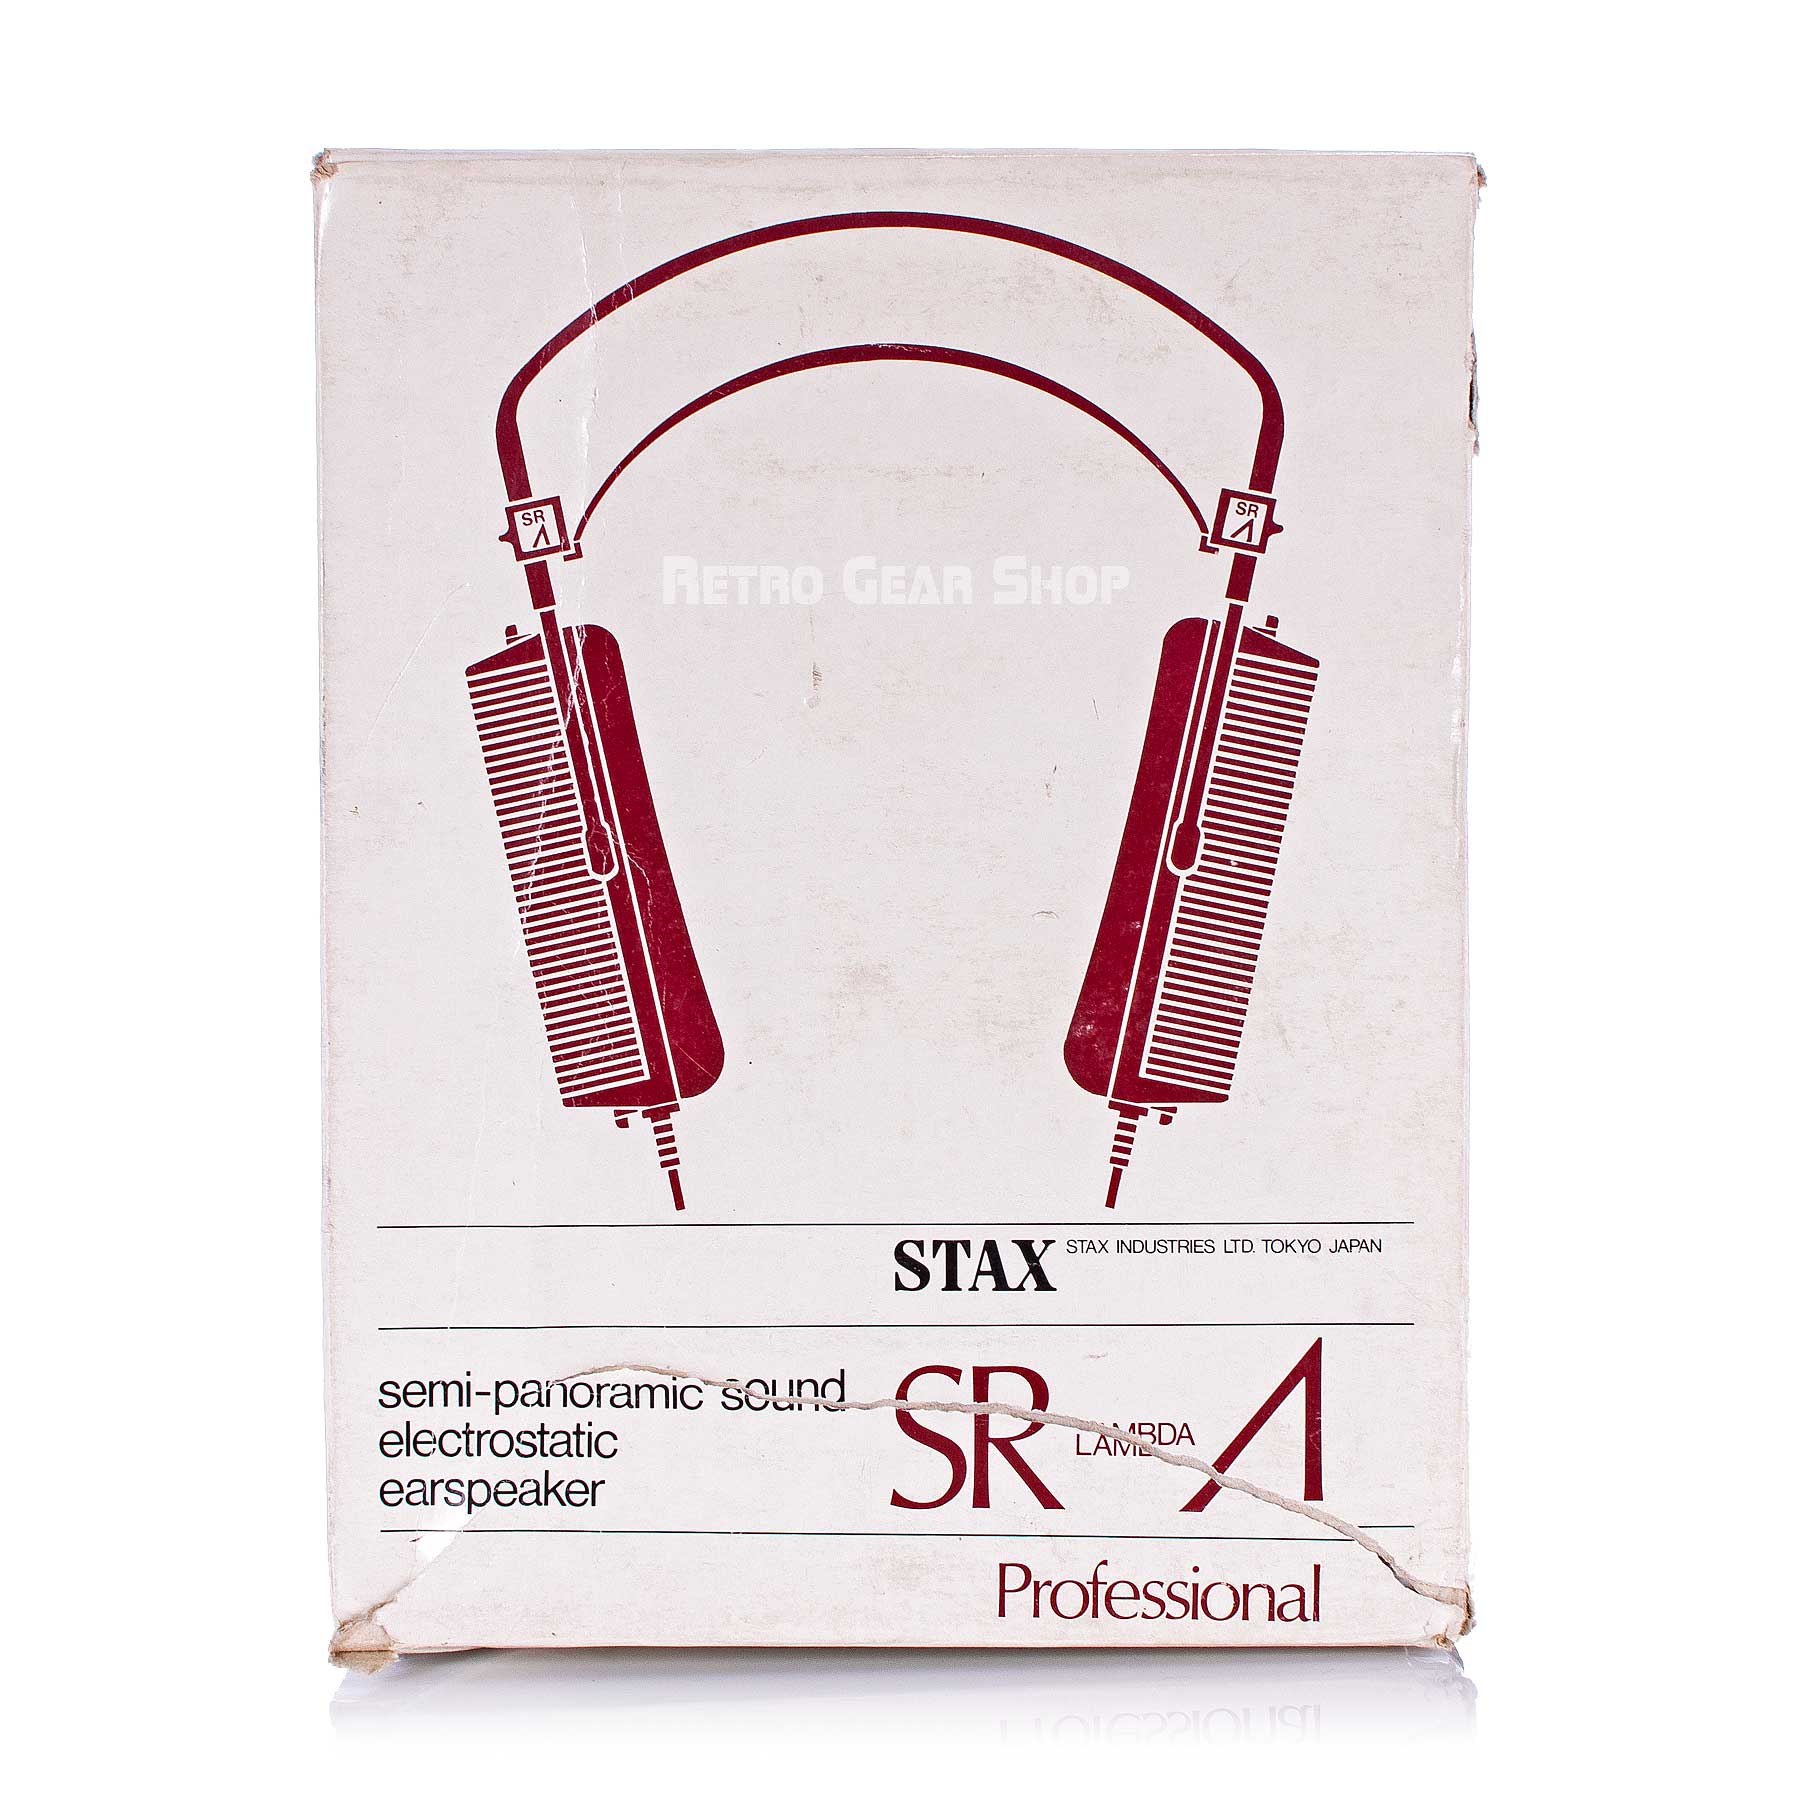 Stax SR Lamda Professional Headphones Rare Vintage Semi-panoramic Sound Electrostatic Earspeaker Original Box #5